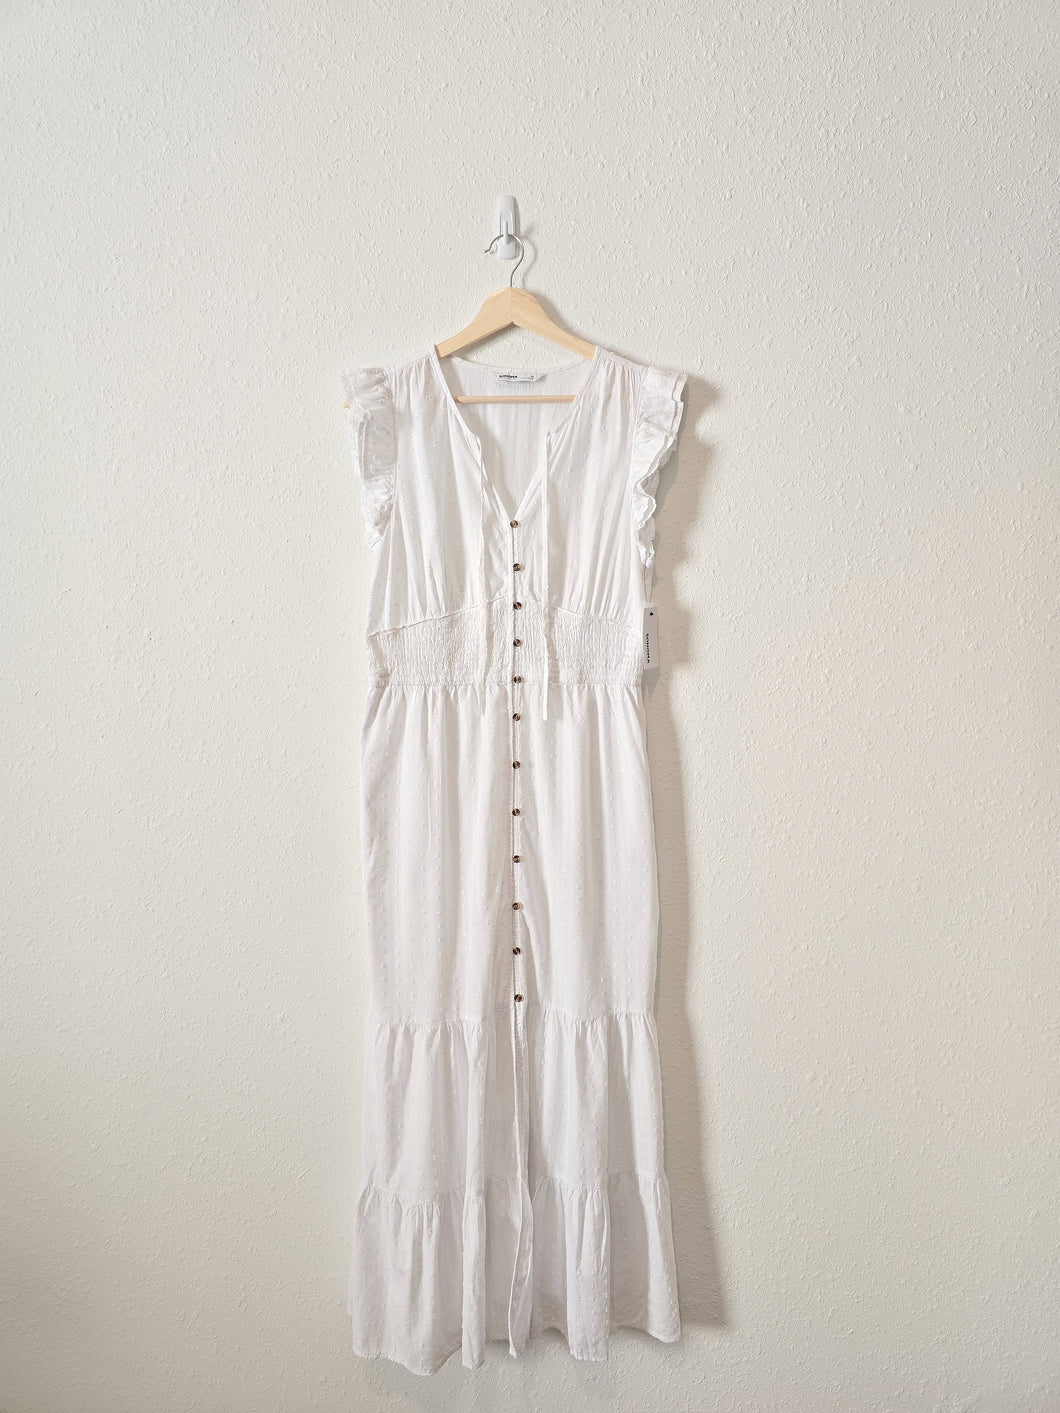 NEW White Textured Maxi Dress (M)